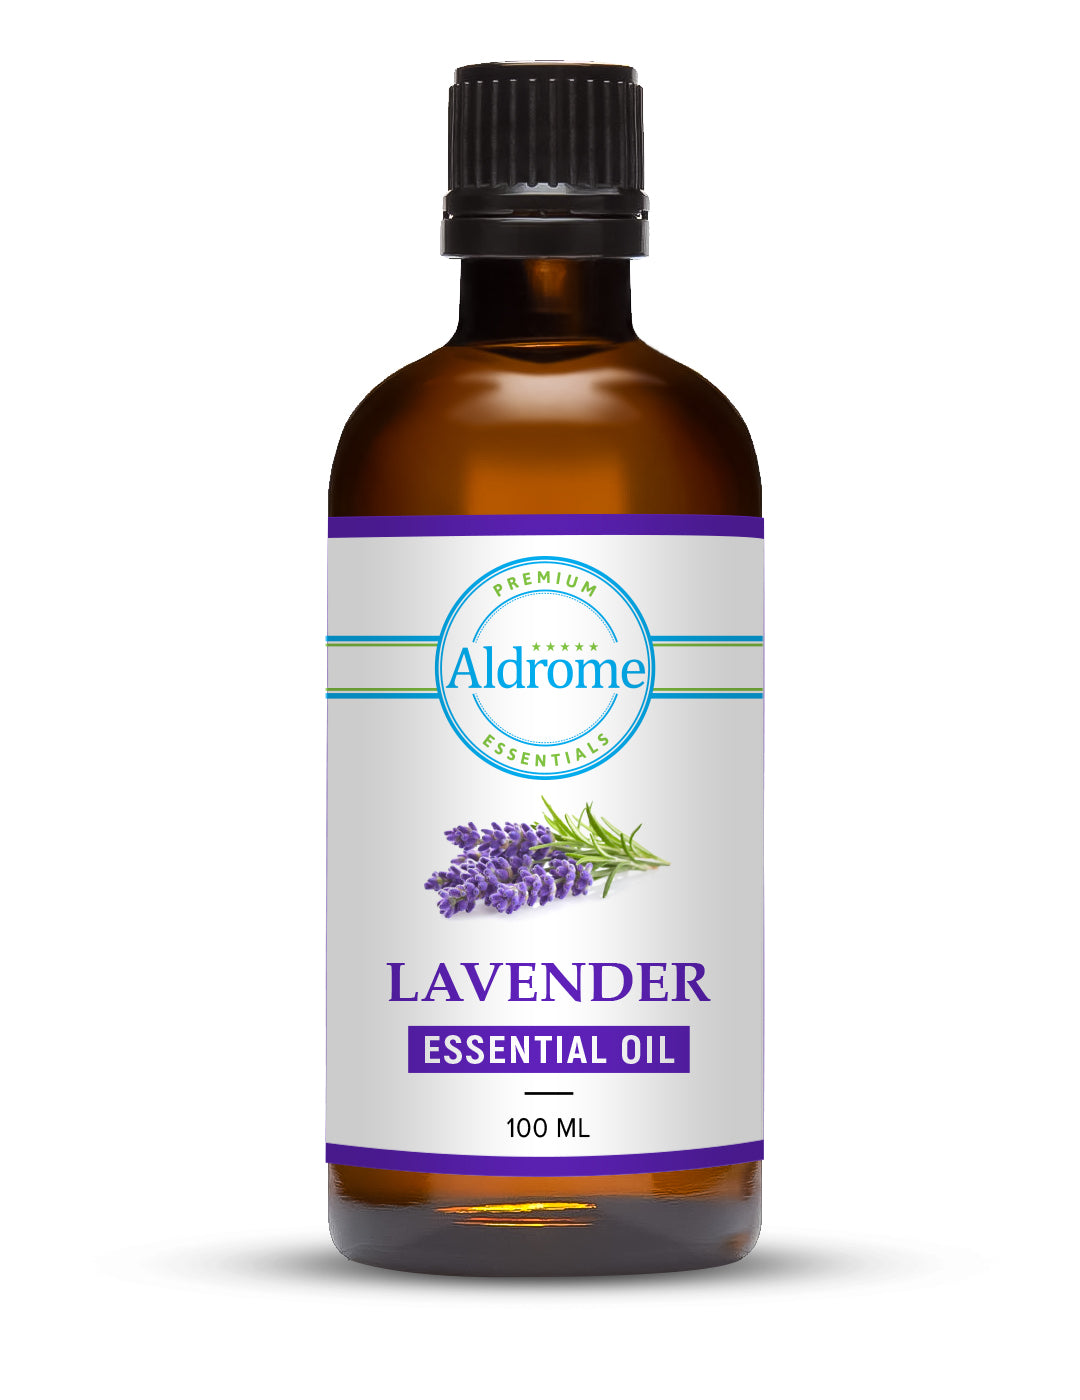 Lavender Essential Oil - 100ml | Buy Lavender Essential Oil | Aldrome Premium Fragrance Oil